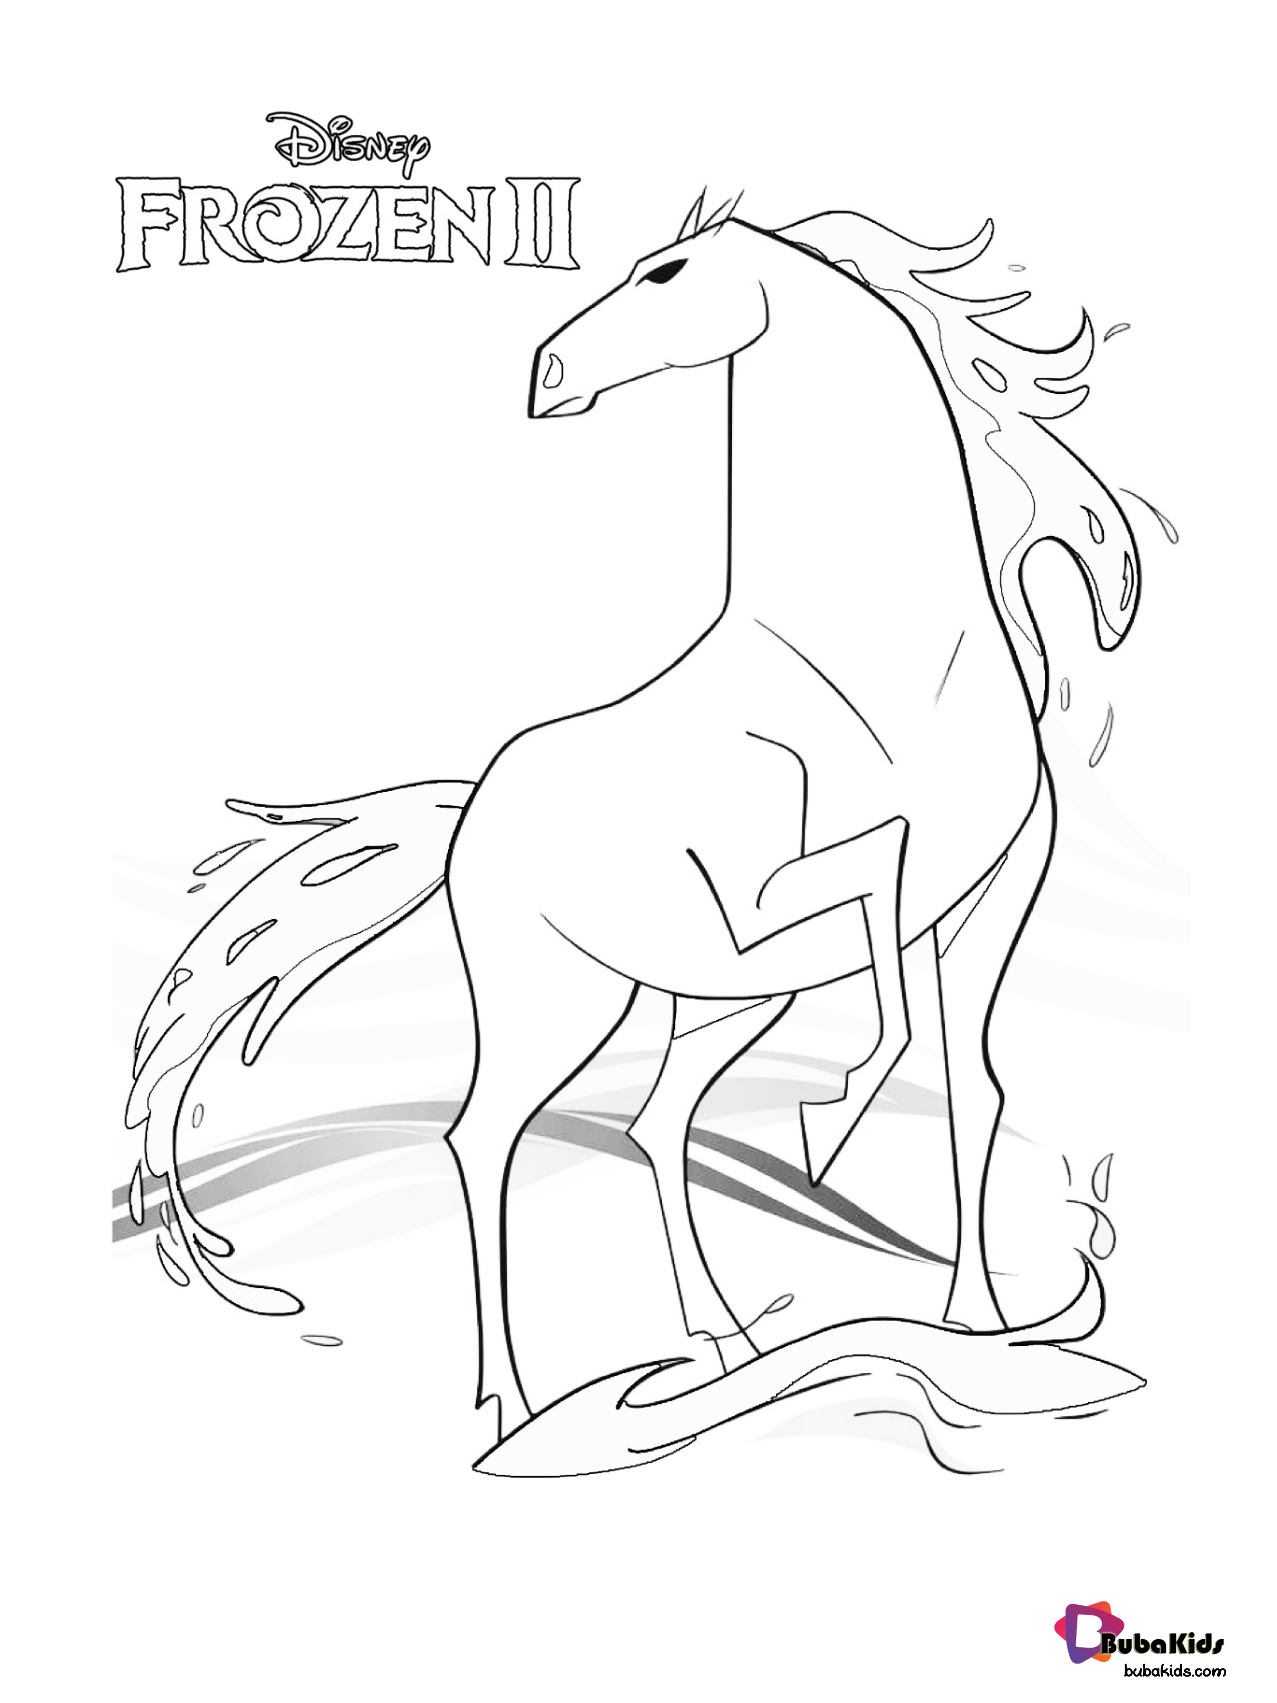 Frozen 2 Nokk the magic horse coloring page.